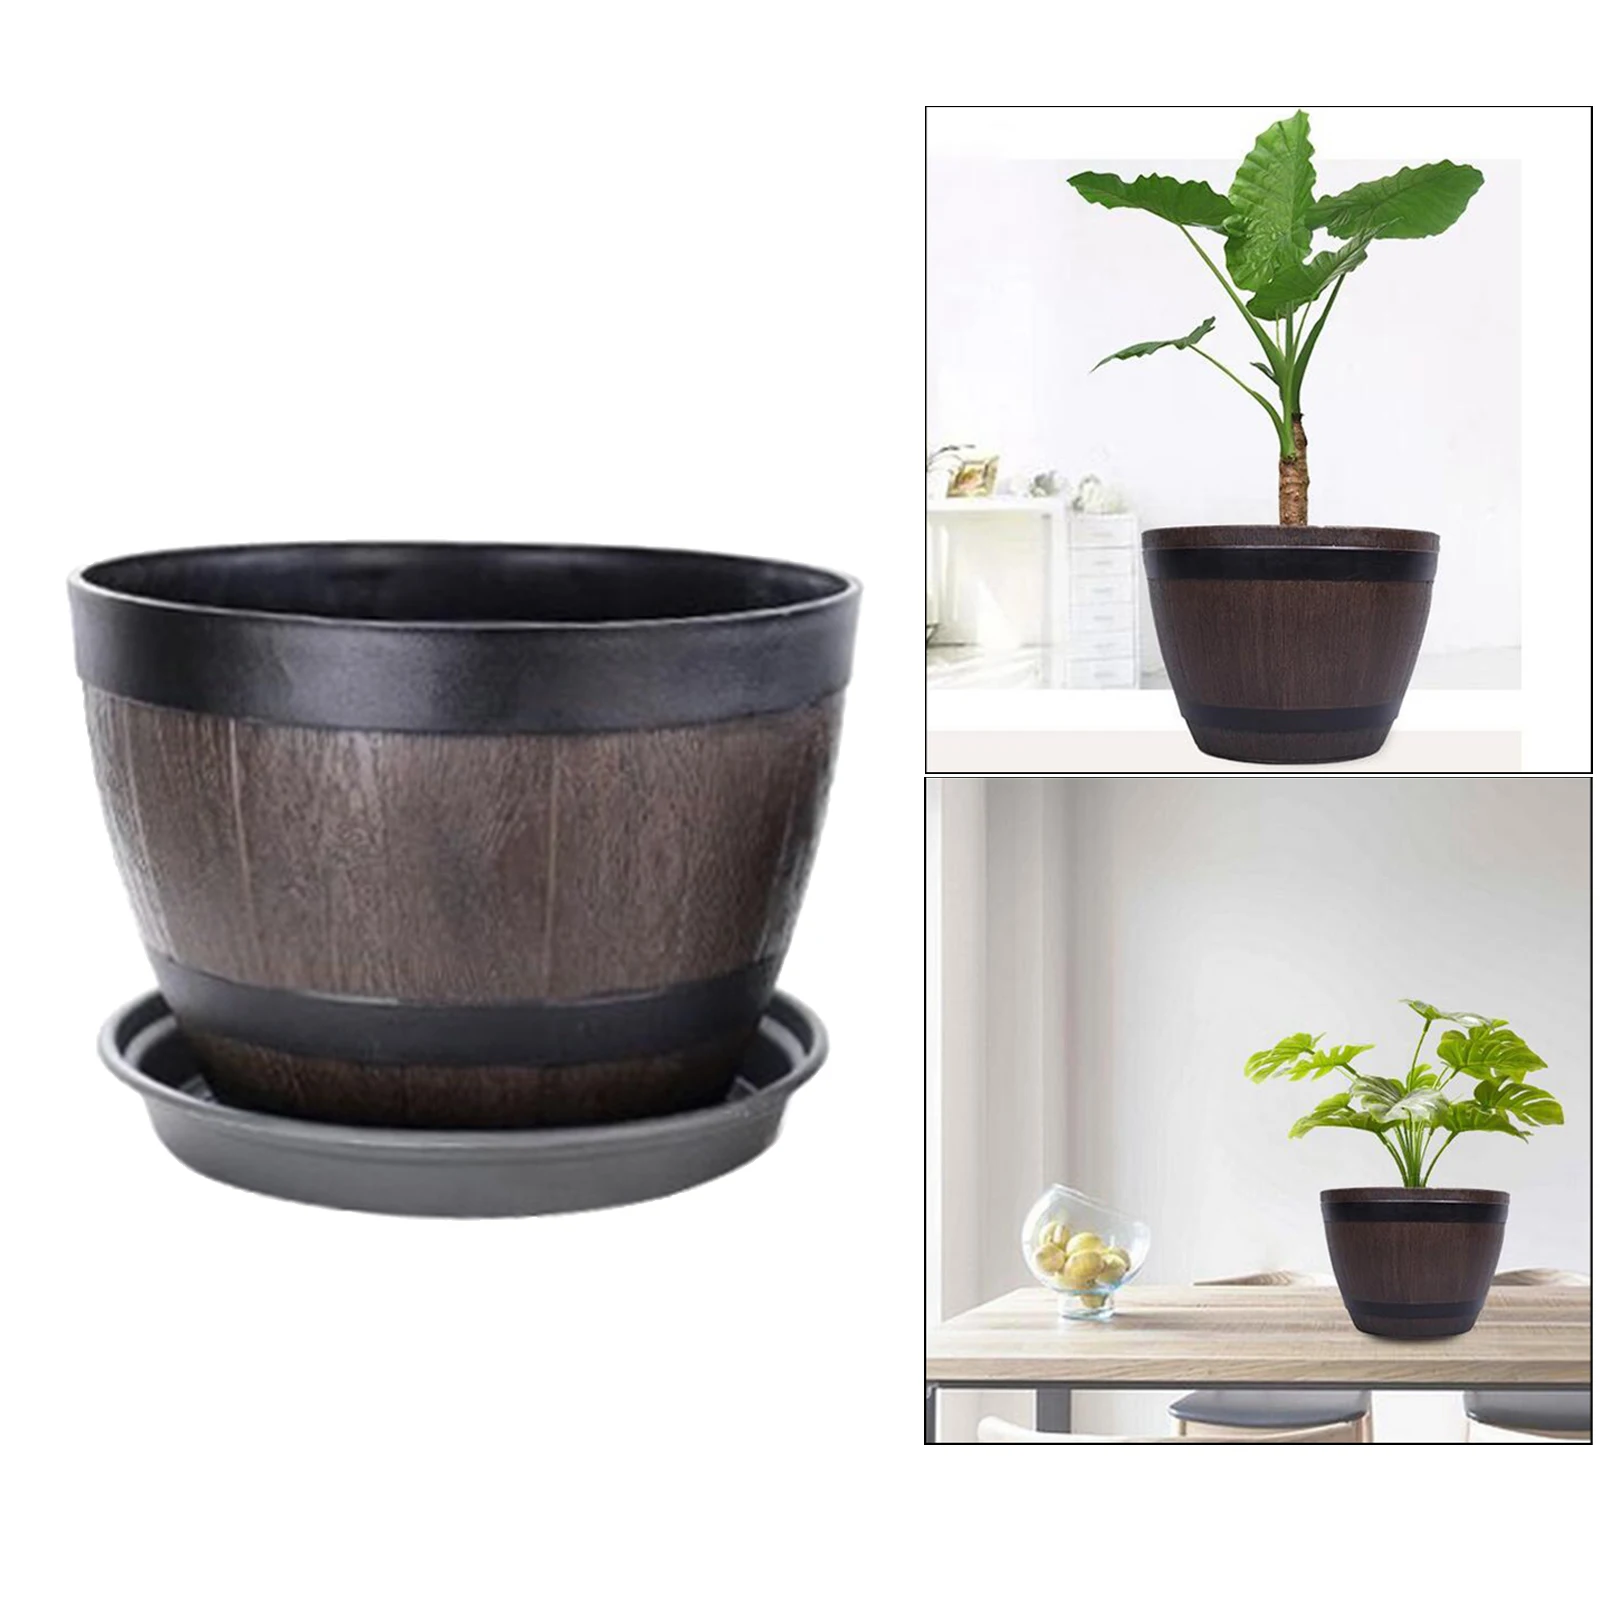 Retro Resin Barrel Flower Pot with Tray 12inch Indoor Garden Planter